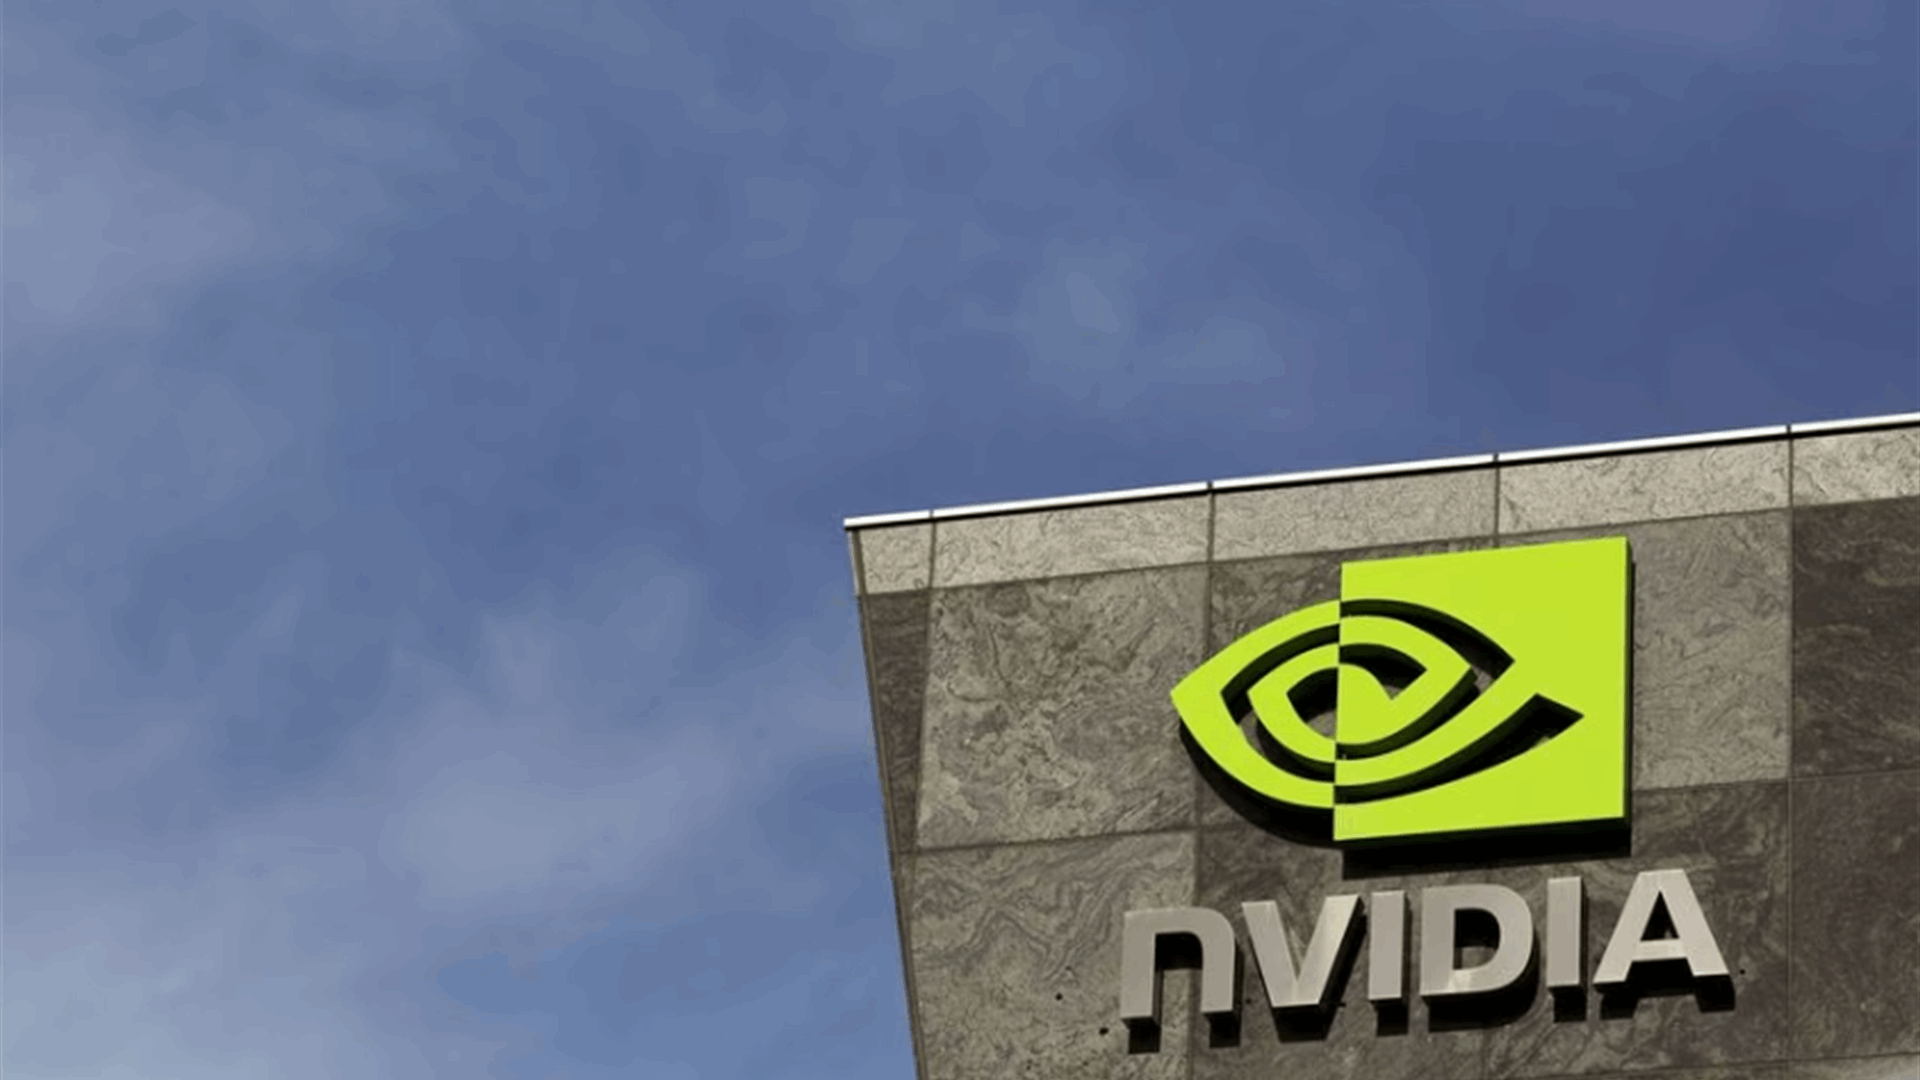 Nvidia chips away at Intel, AMD turf in supercomputers